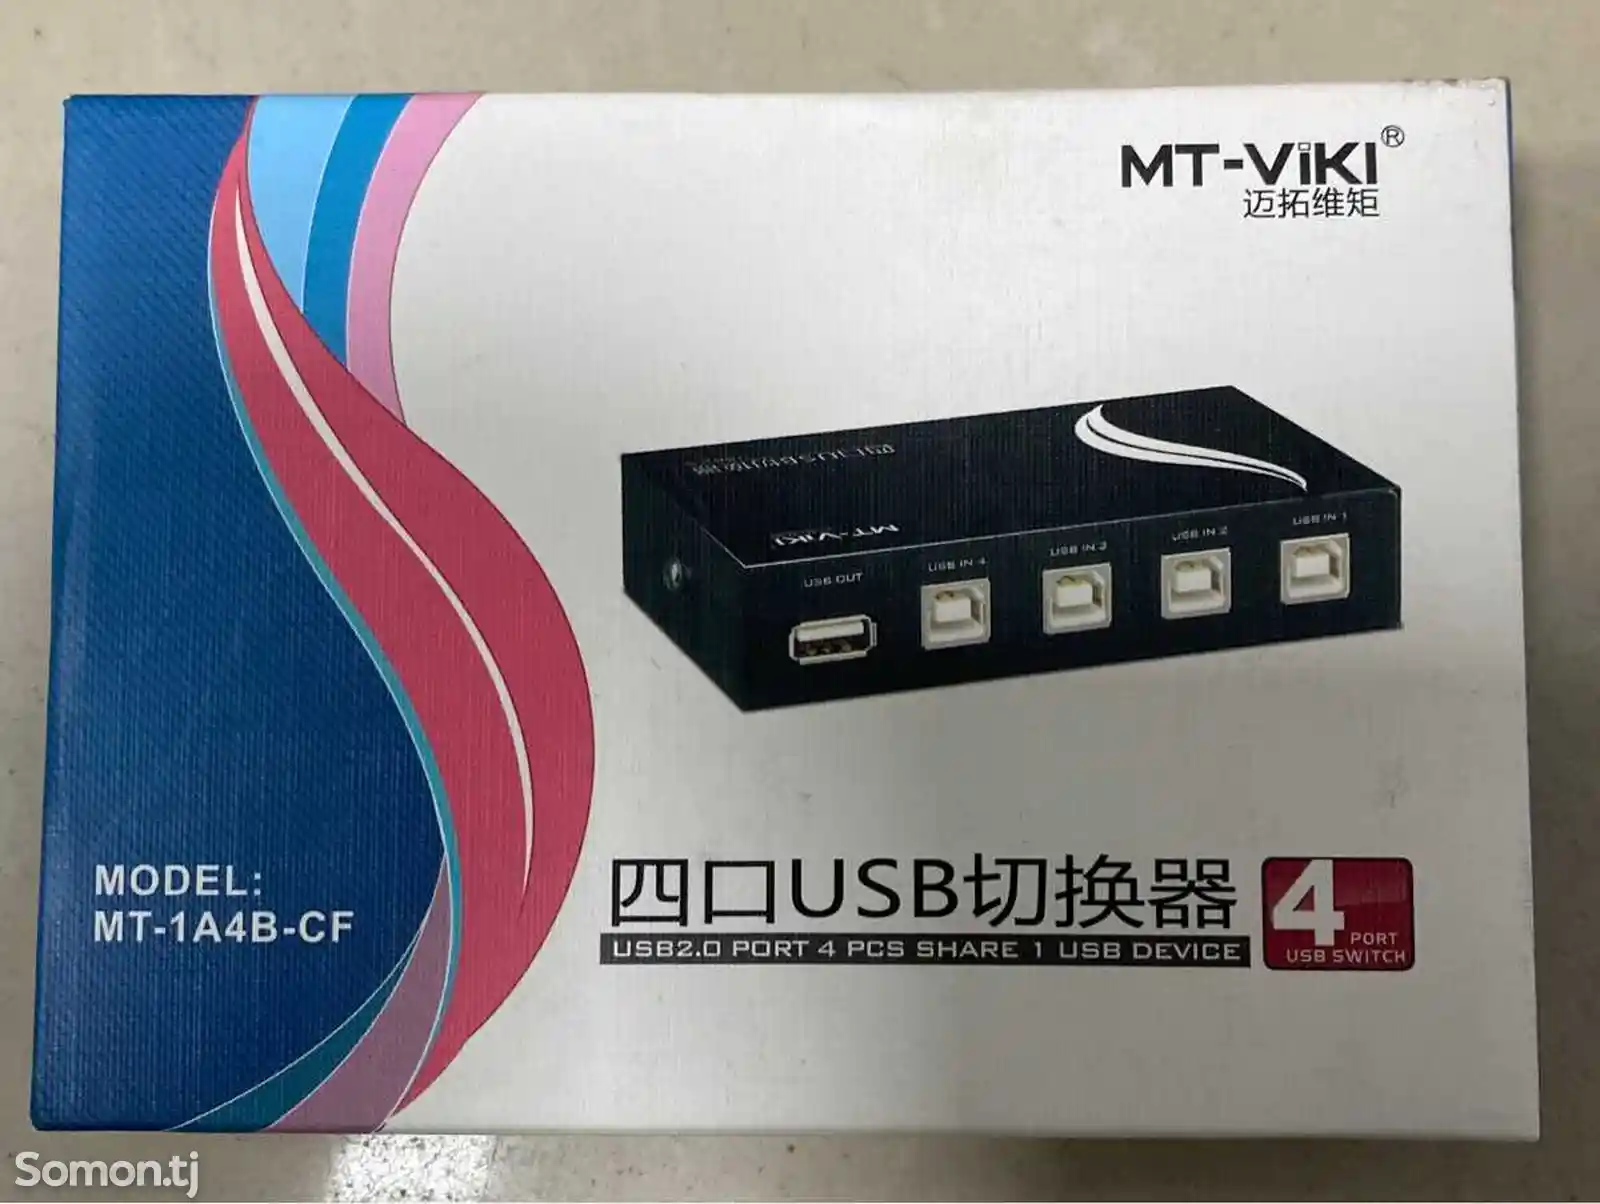 USB Switch для принтера-1